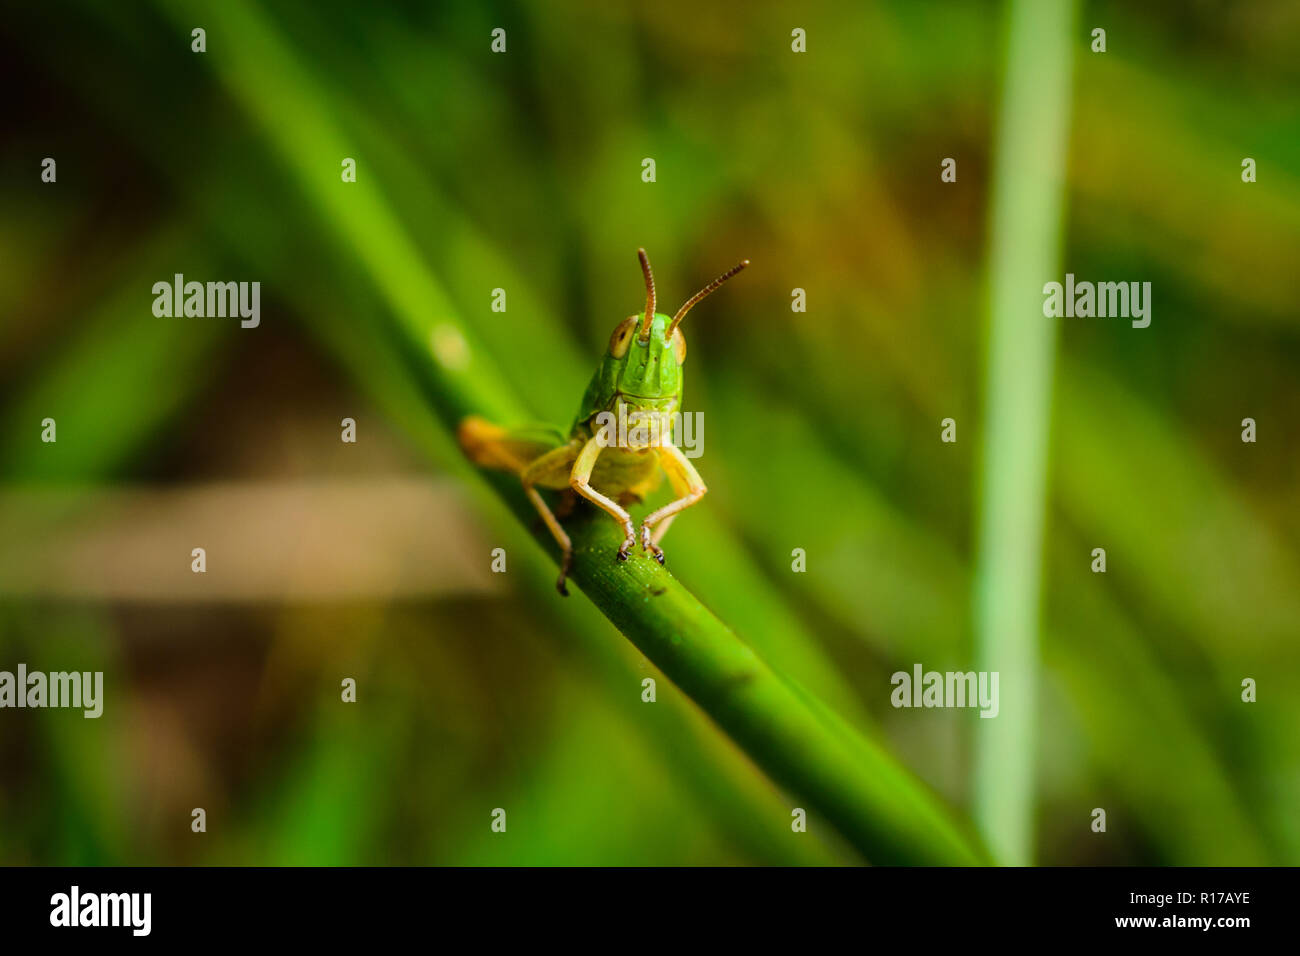 Green grasshopper on the grass blade. Stock Photo